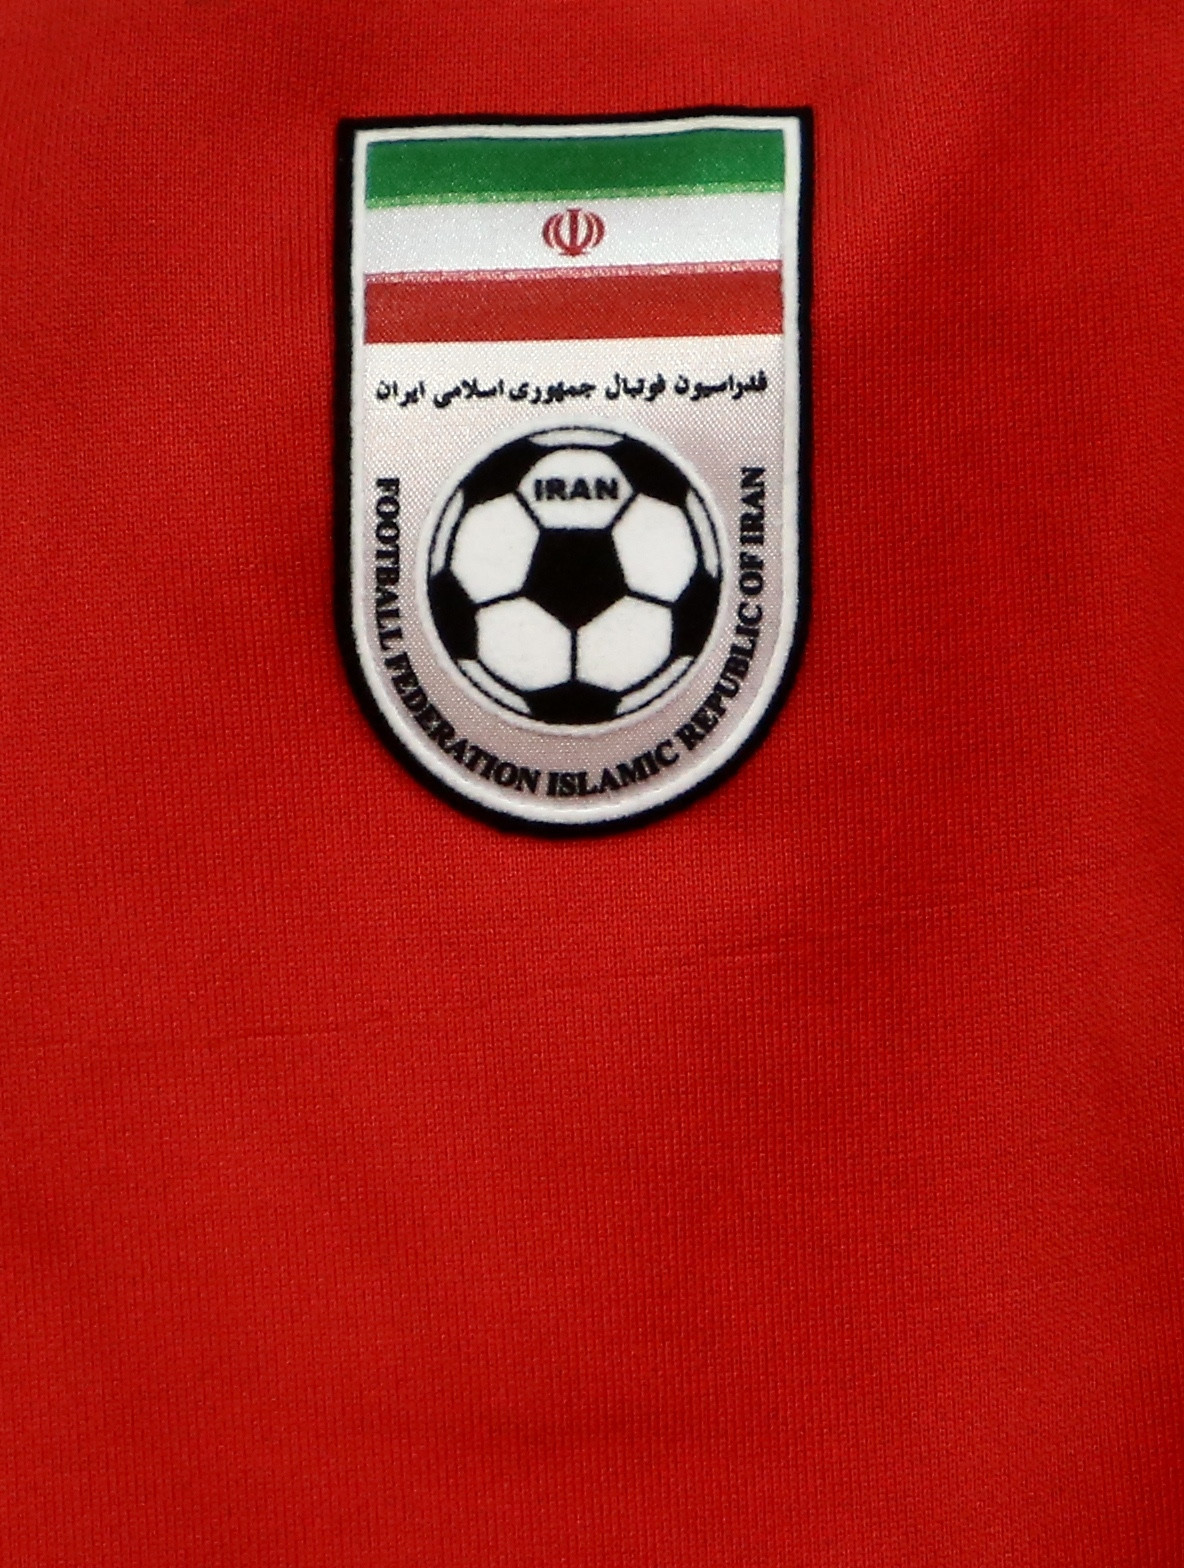 FIFA insists Iranian Football Federation must postpone elections despite appeal